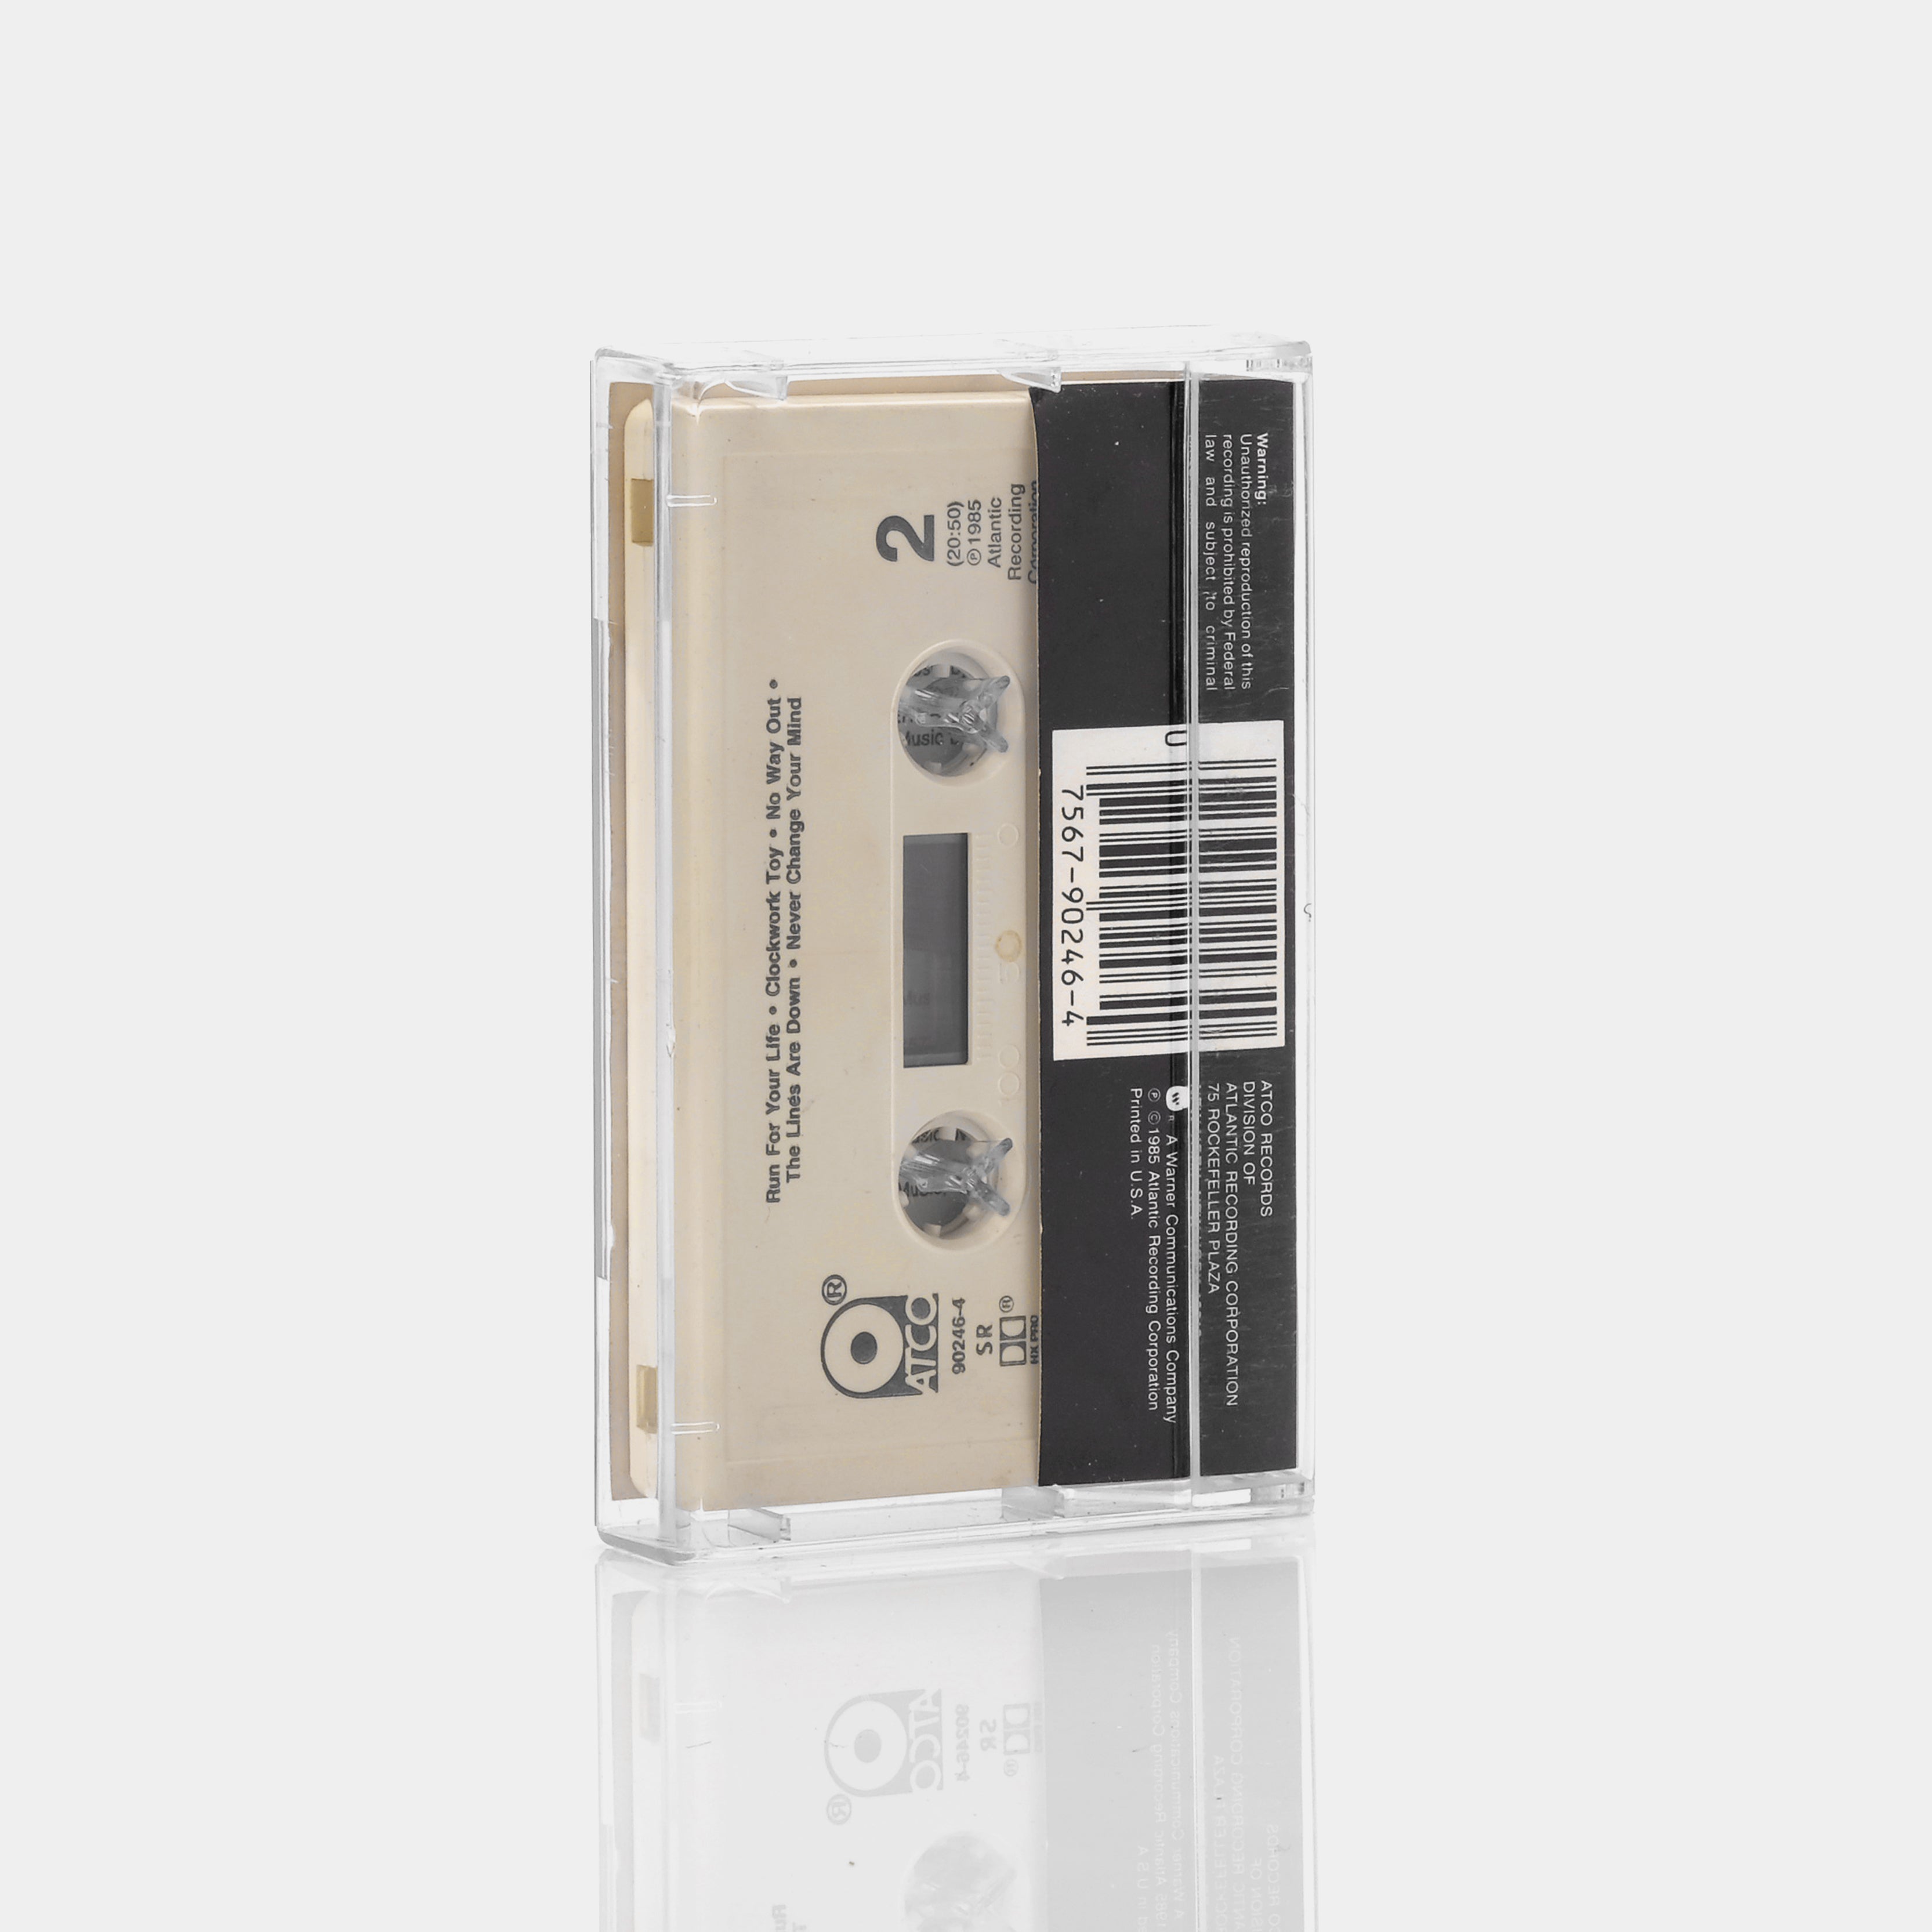 Loudness - Thunder In The East Cassette Tape